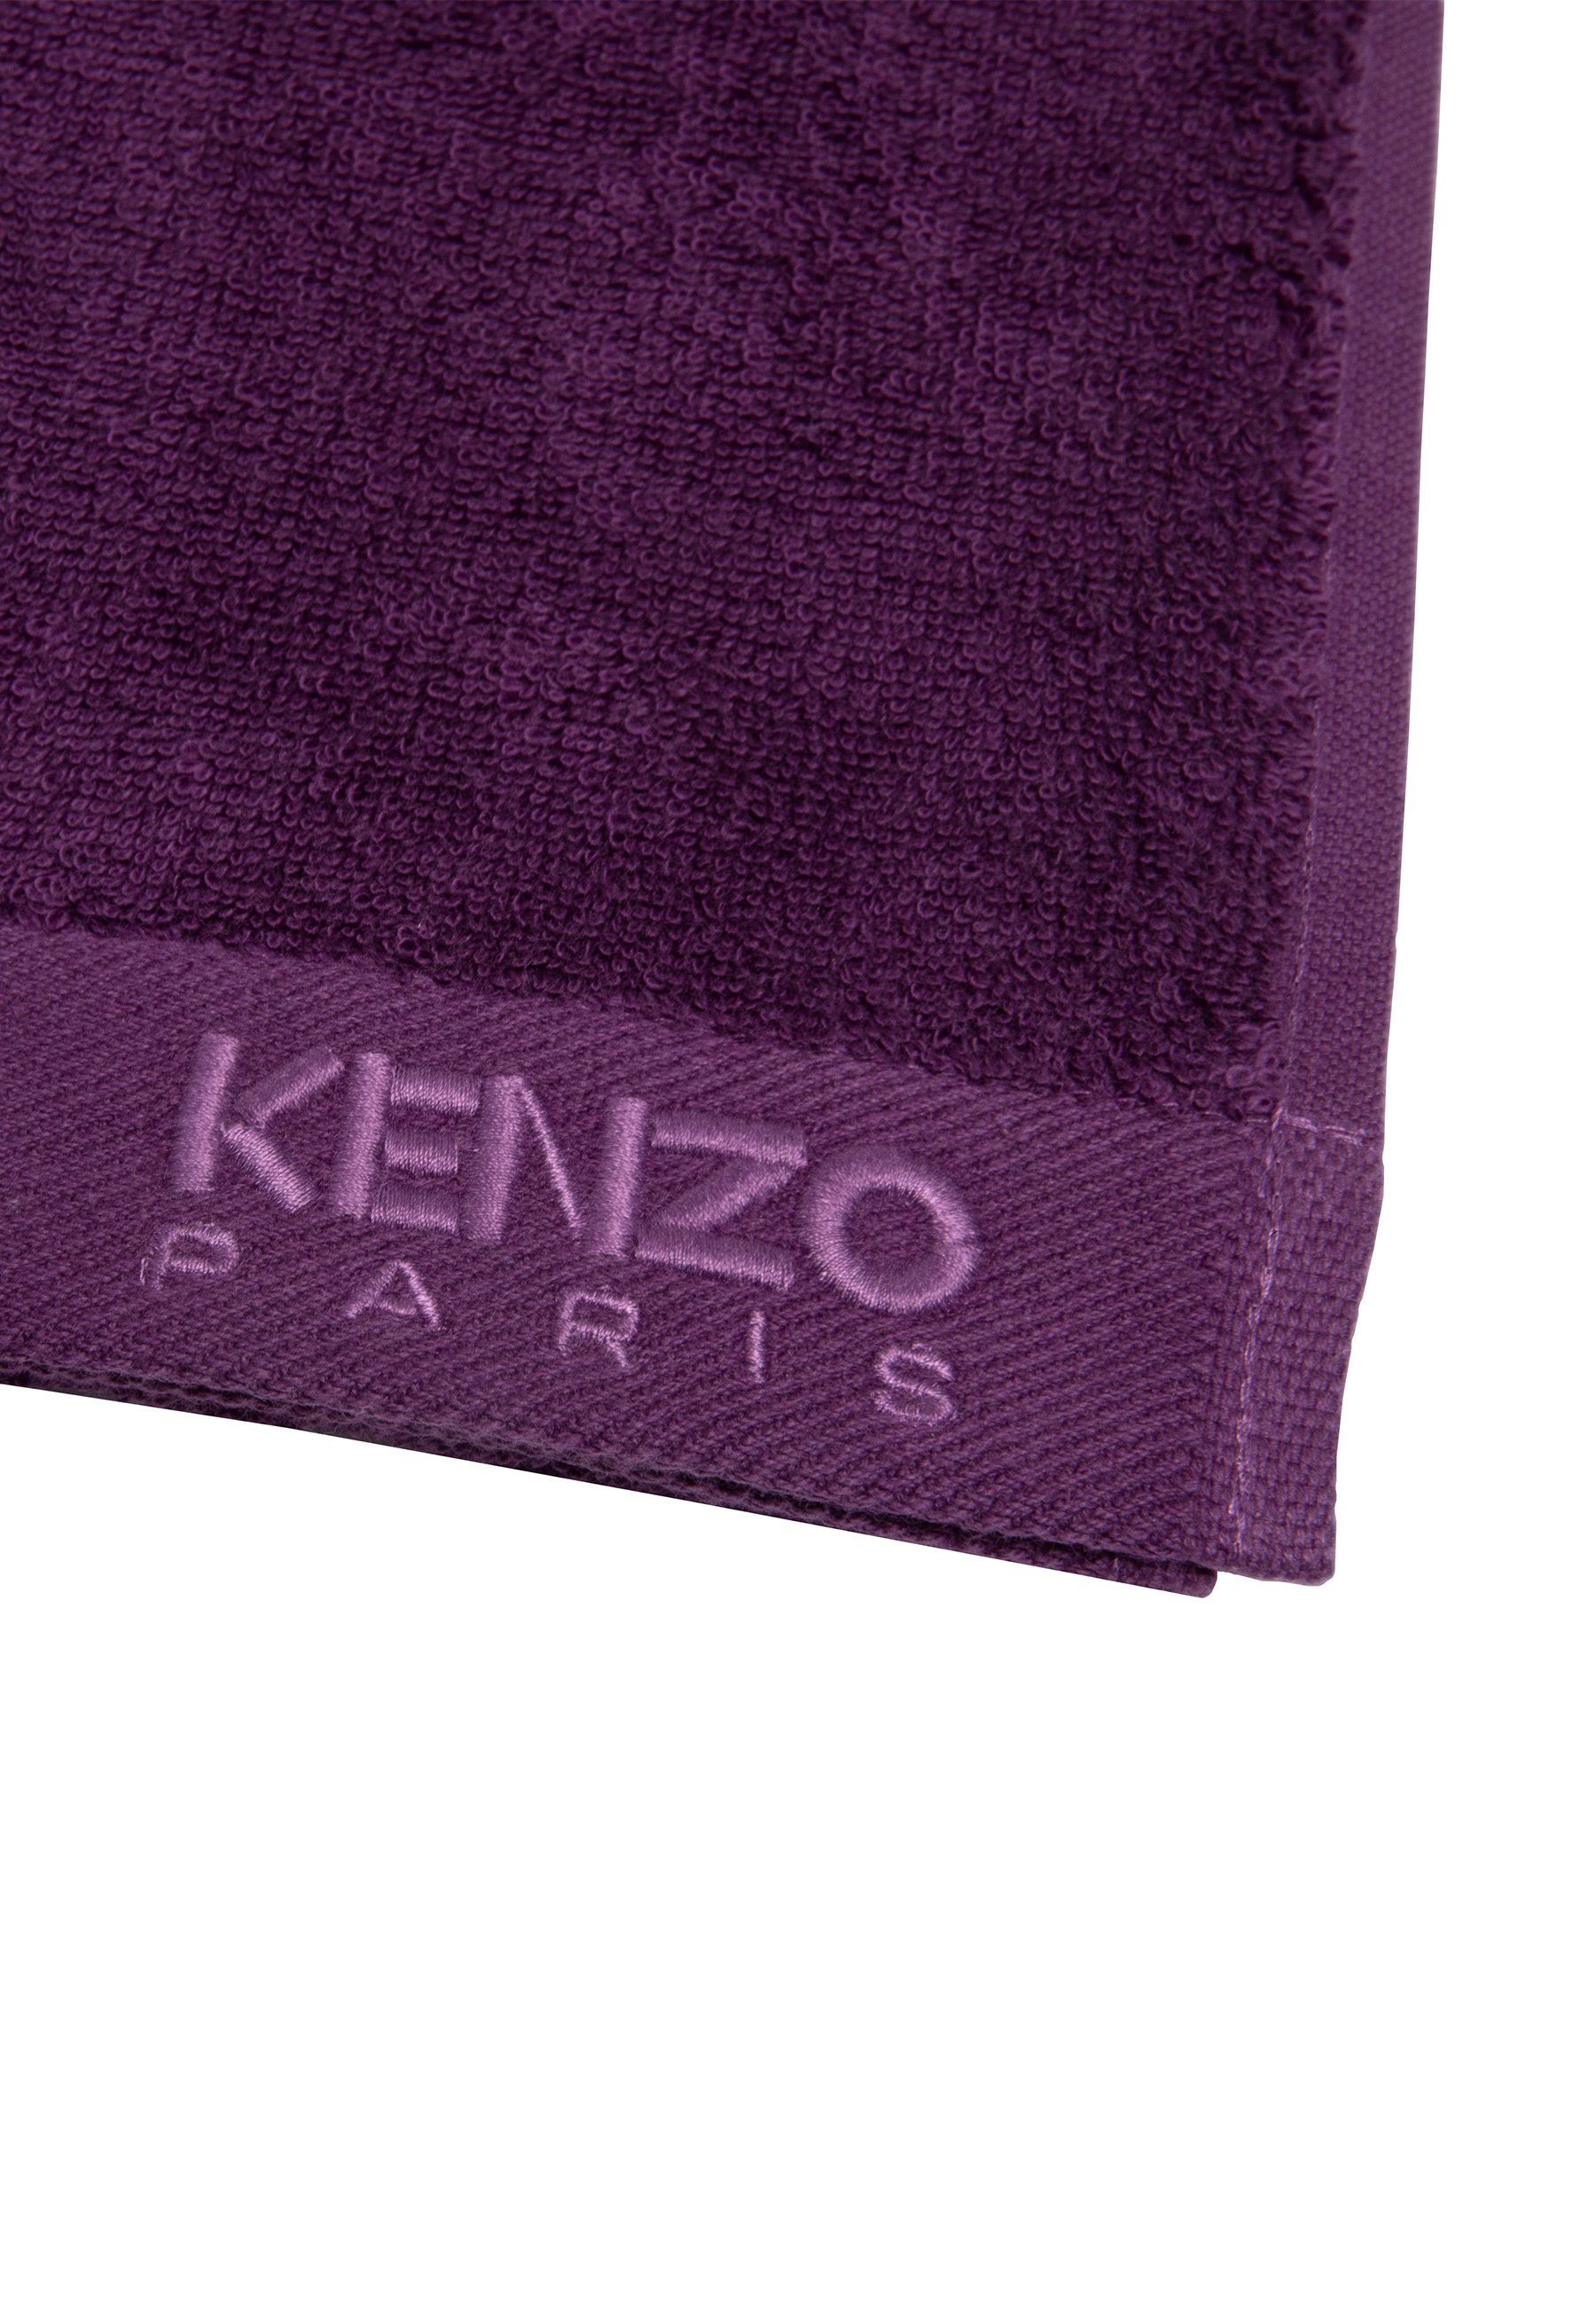 Kz MAISON LILA Iconic Handtücher KENZO Handtuch, Label-Applikationen mit